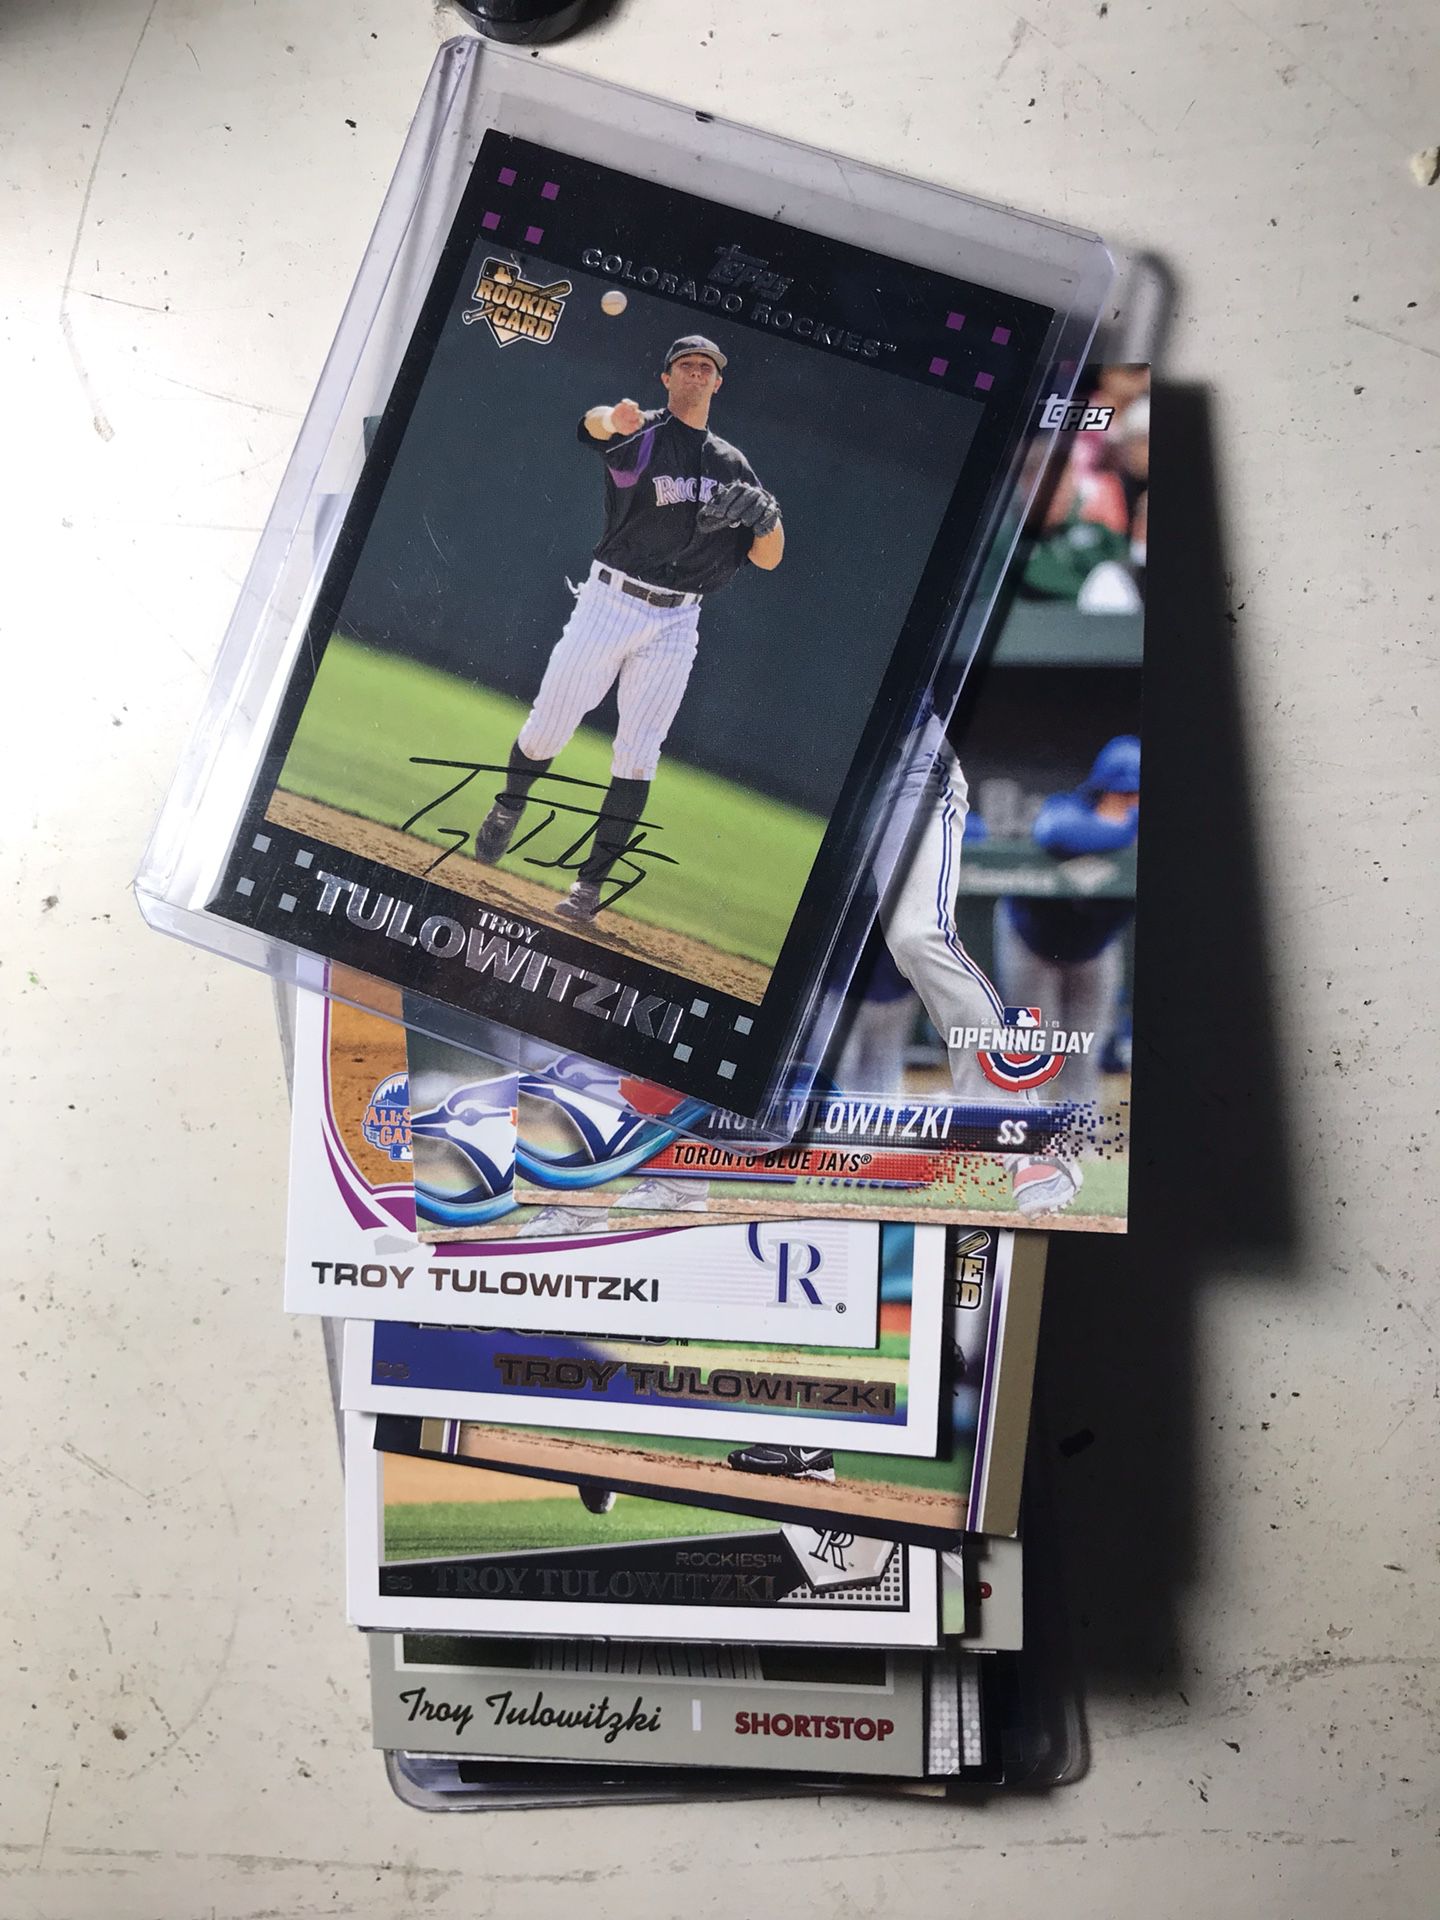 Lot of Troy Tulowitzki baseball trading cards